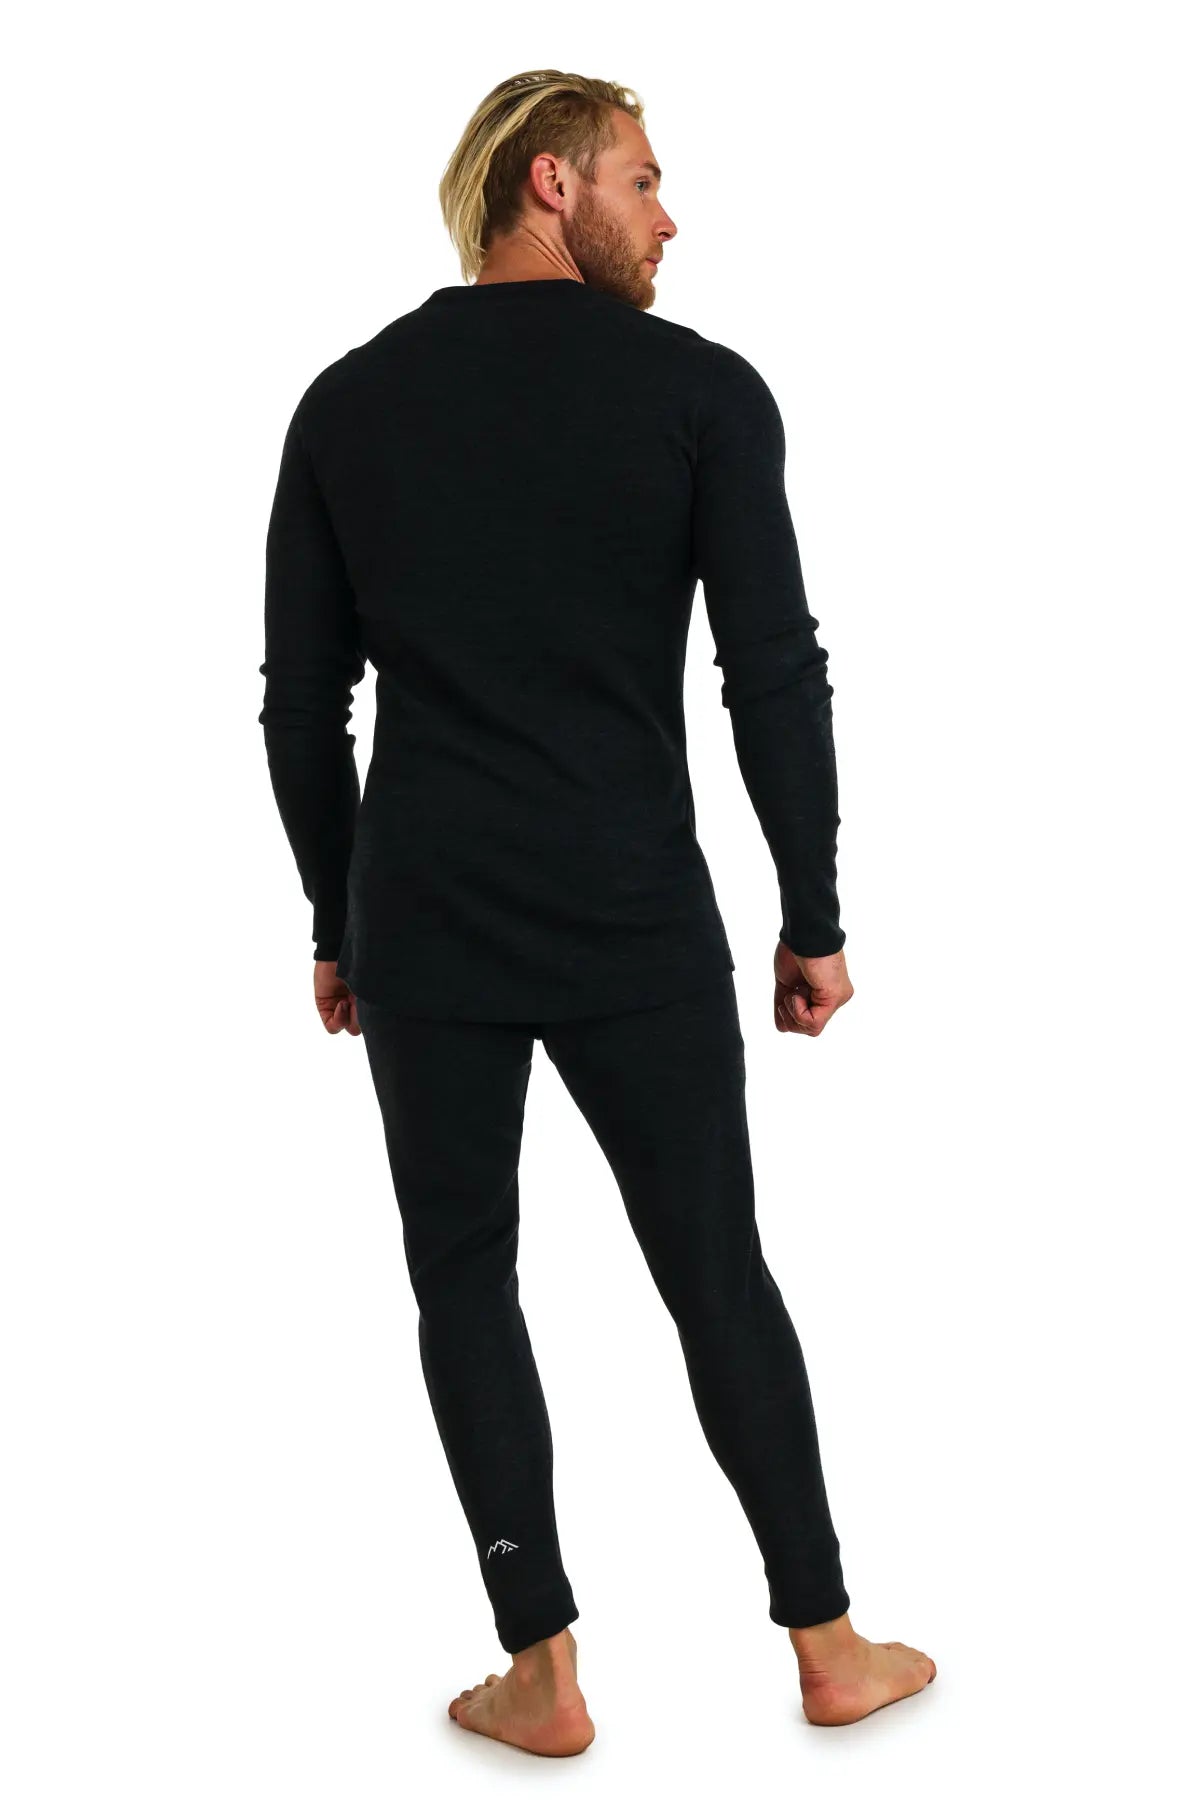 Black Merino Wool Pants - Heavyweight Base Layer